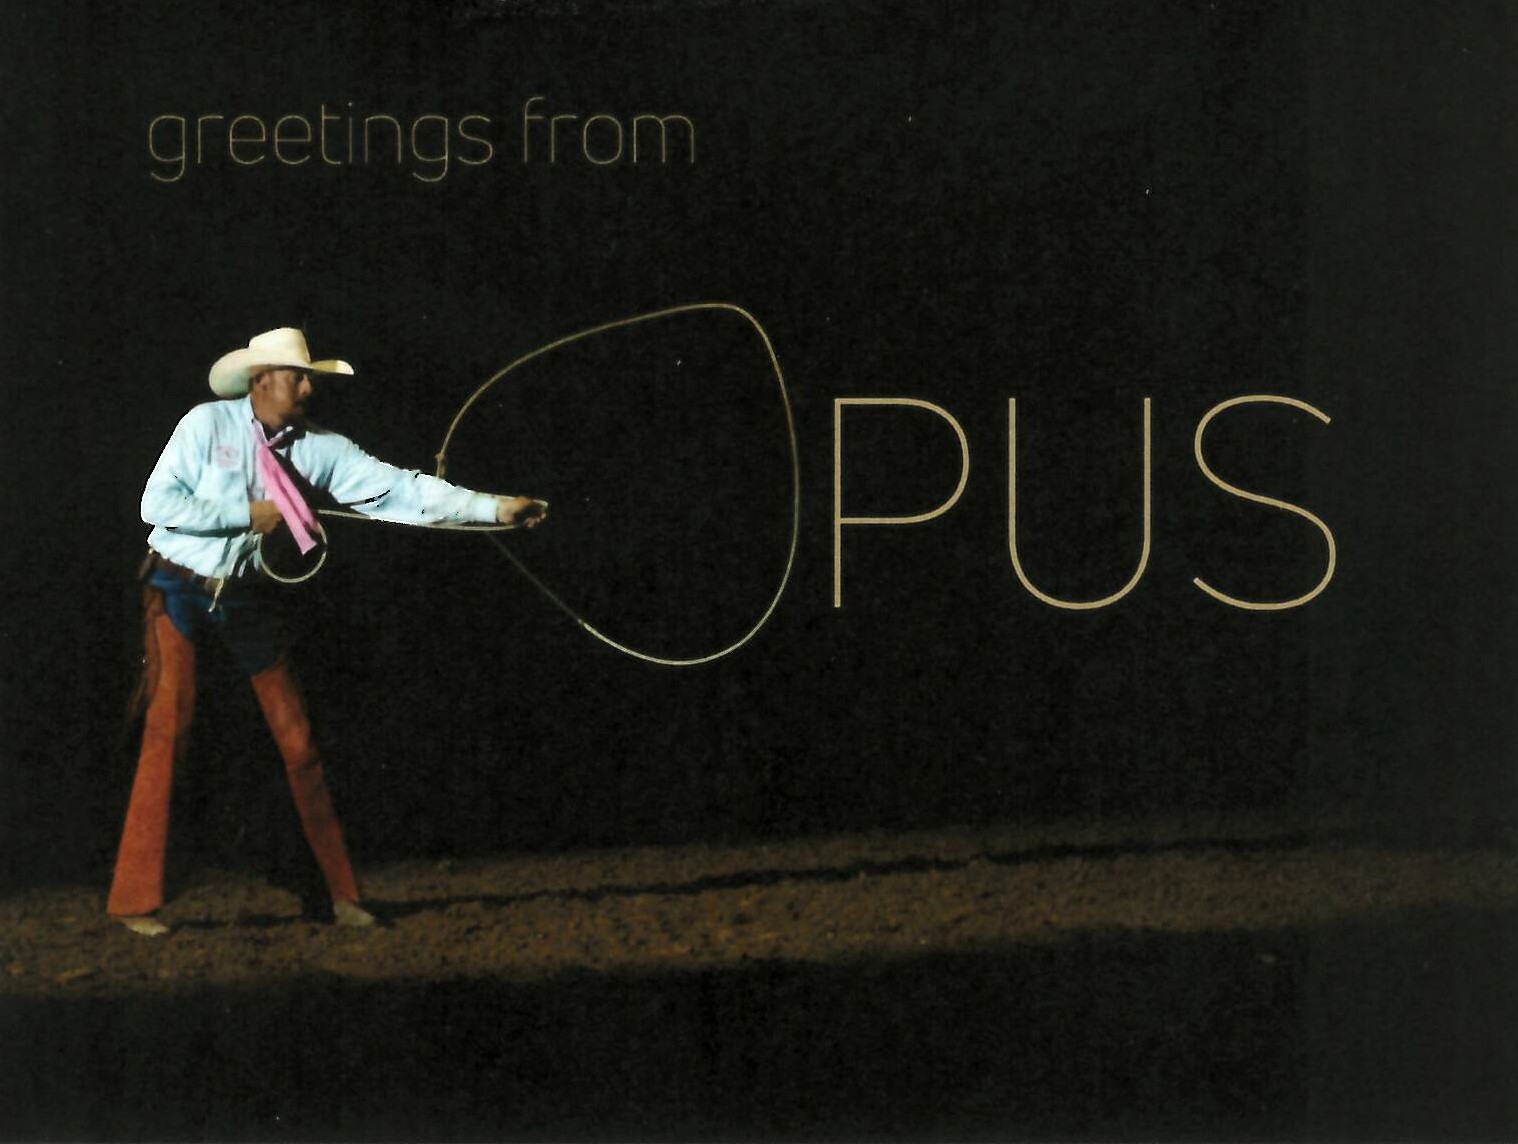 Greetings from Opus